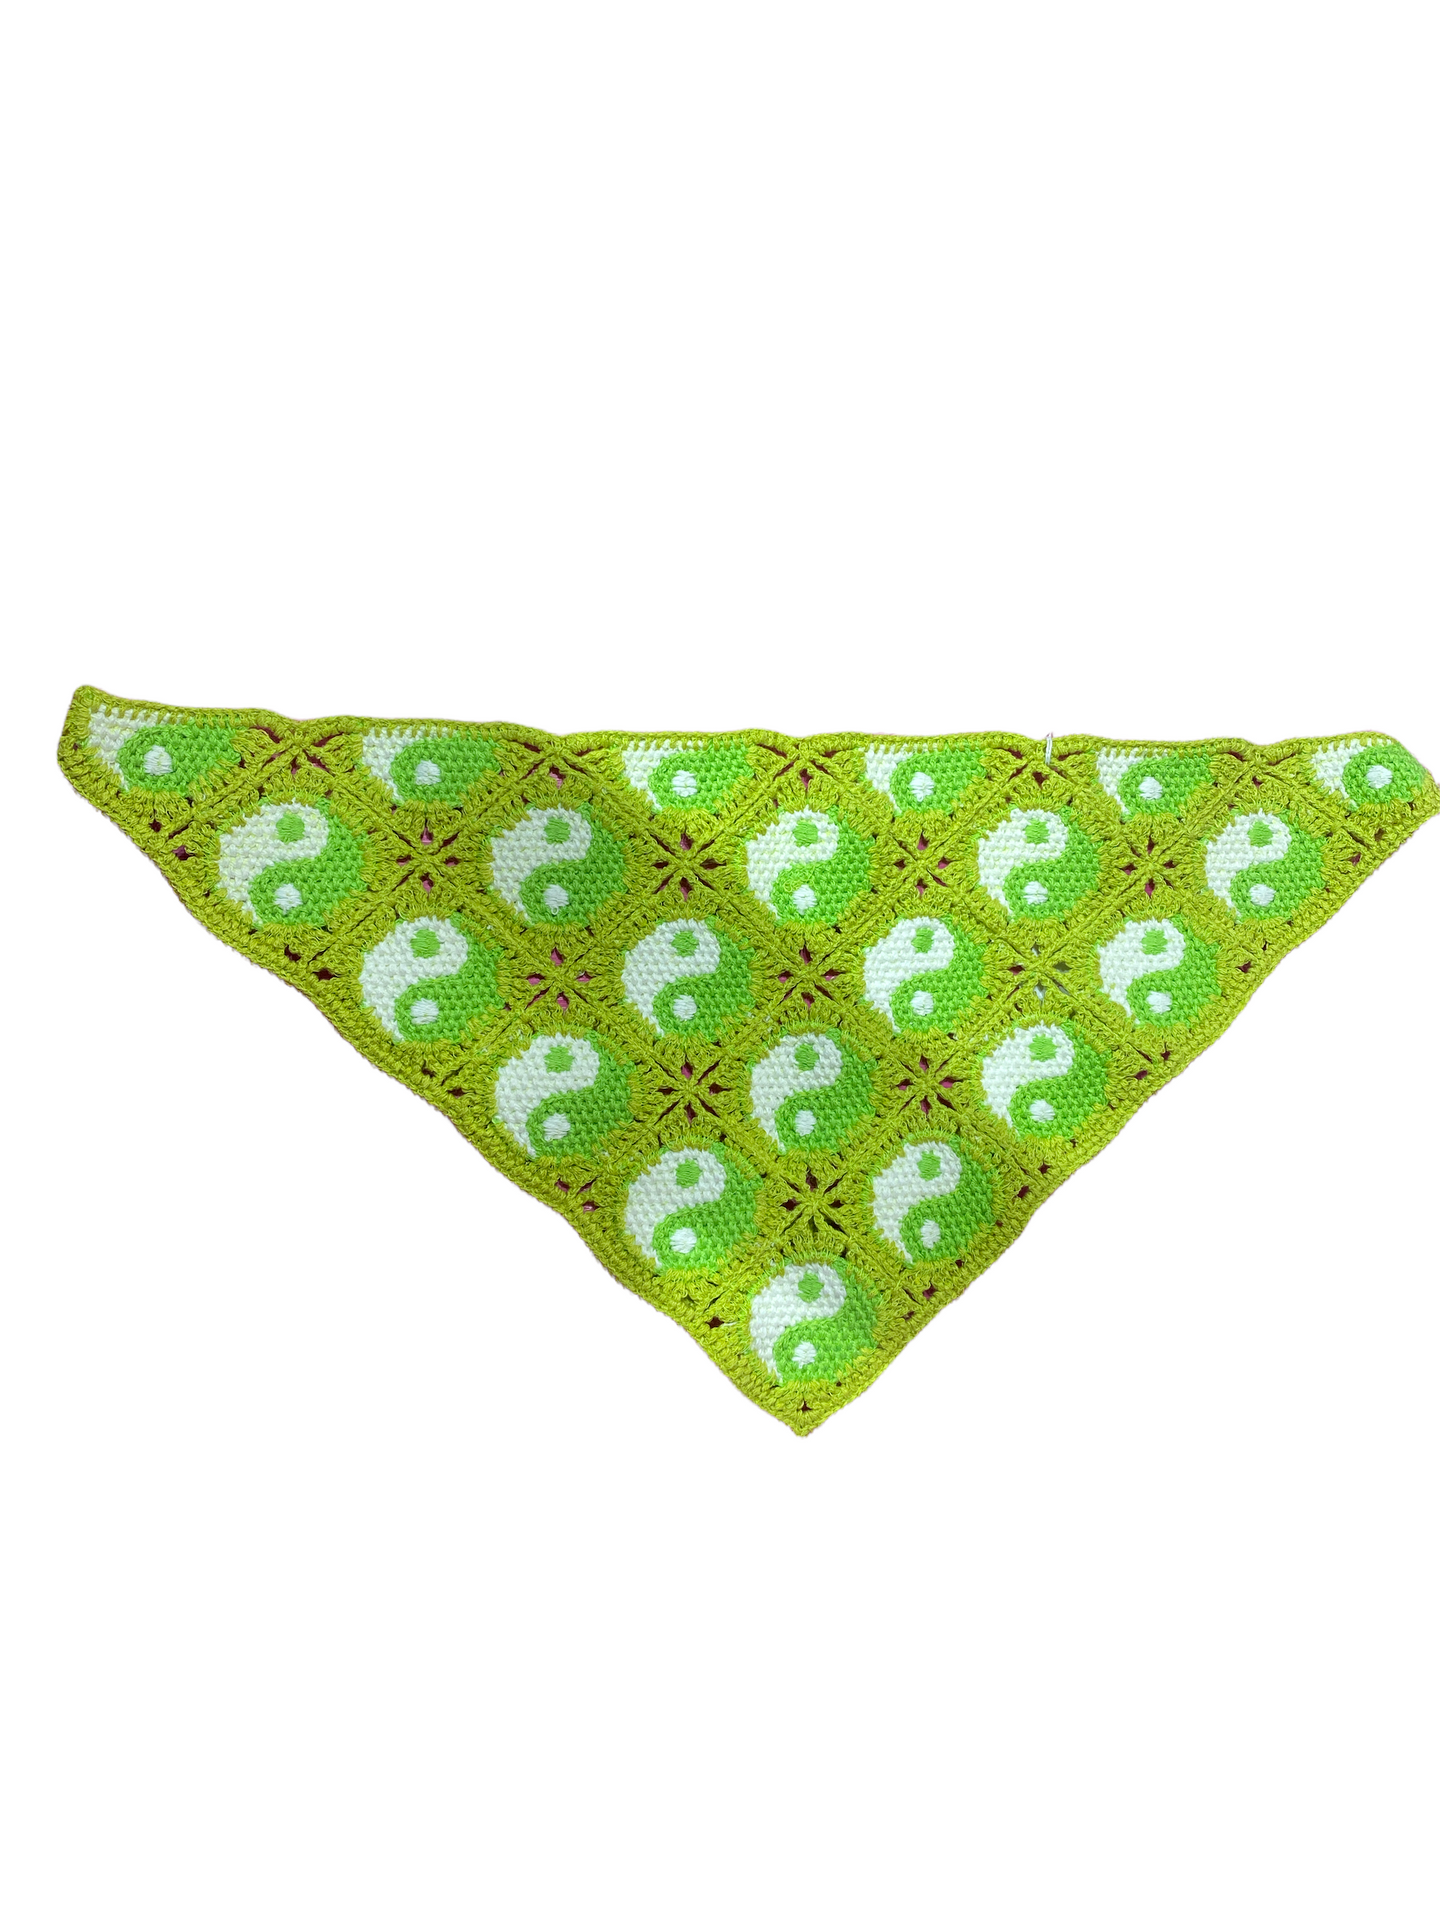 green yolo bandana